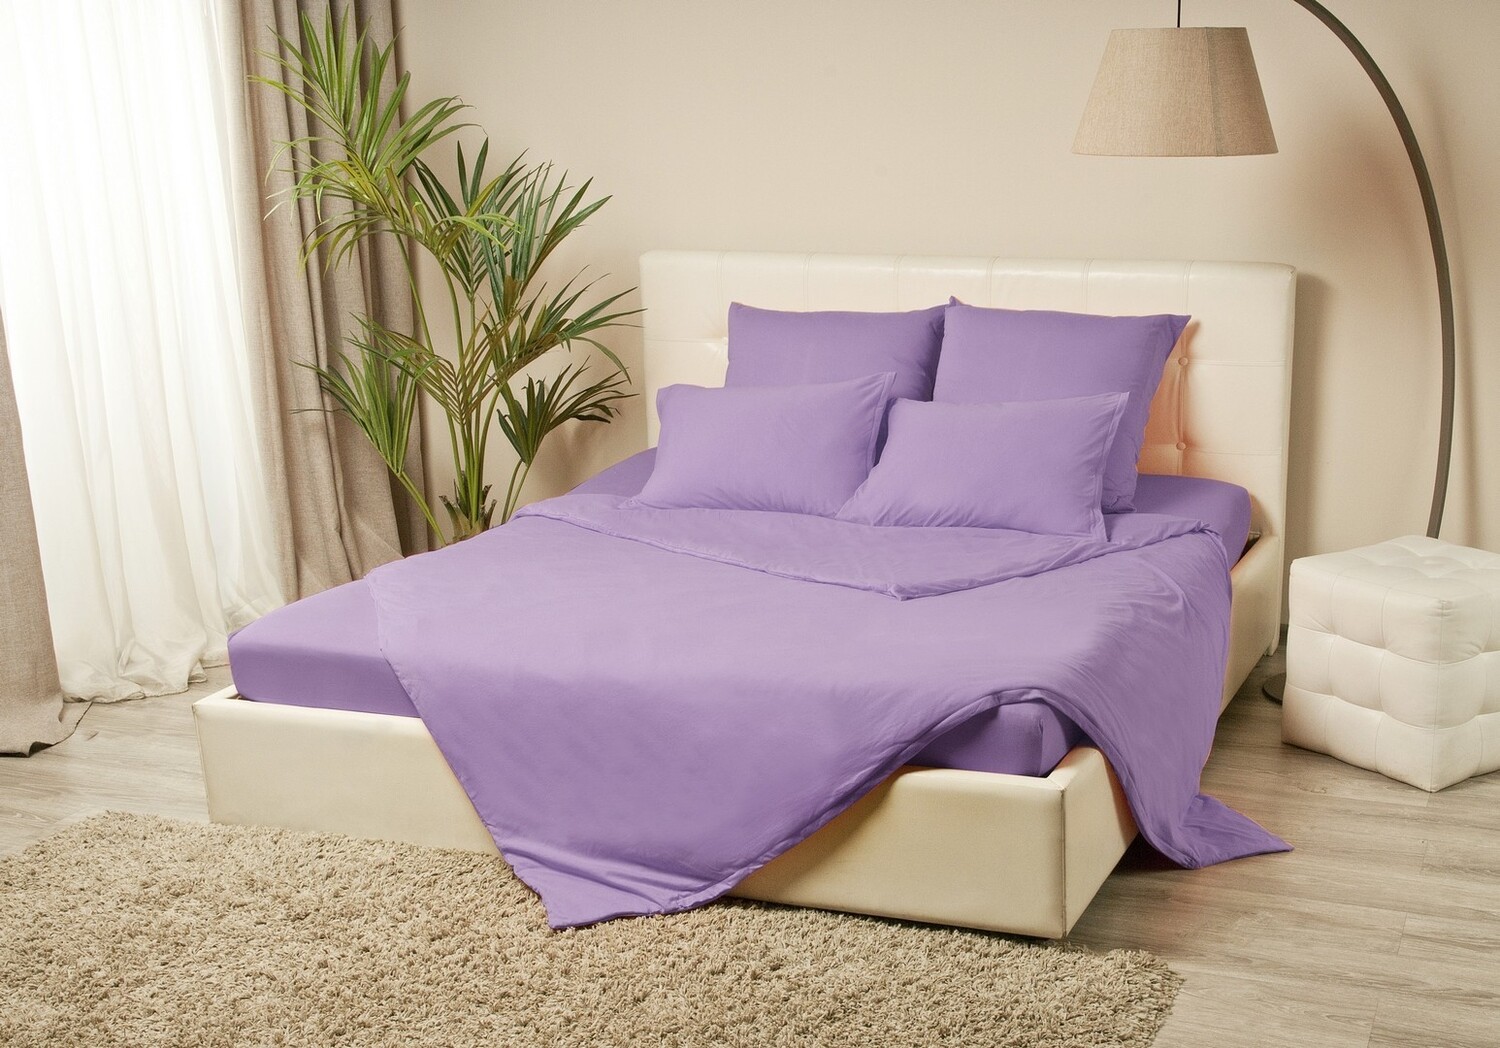 Пододеяльник Violett цвет: сиреневый (140х205 см), размер 140х205 см kup873282 Пододеяльник Violett цвет: сиреневый (140х205 см) - фото 1